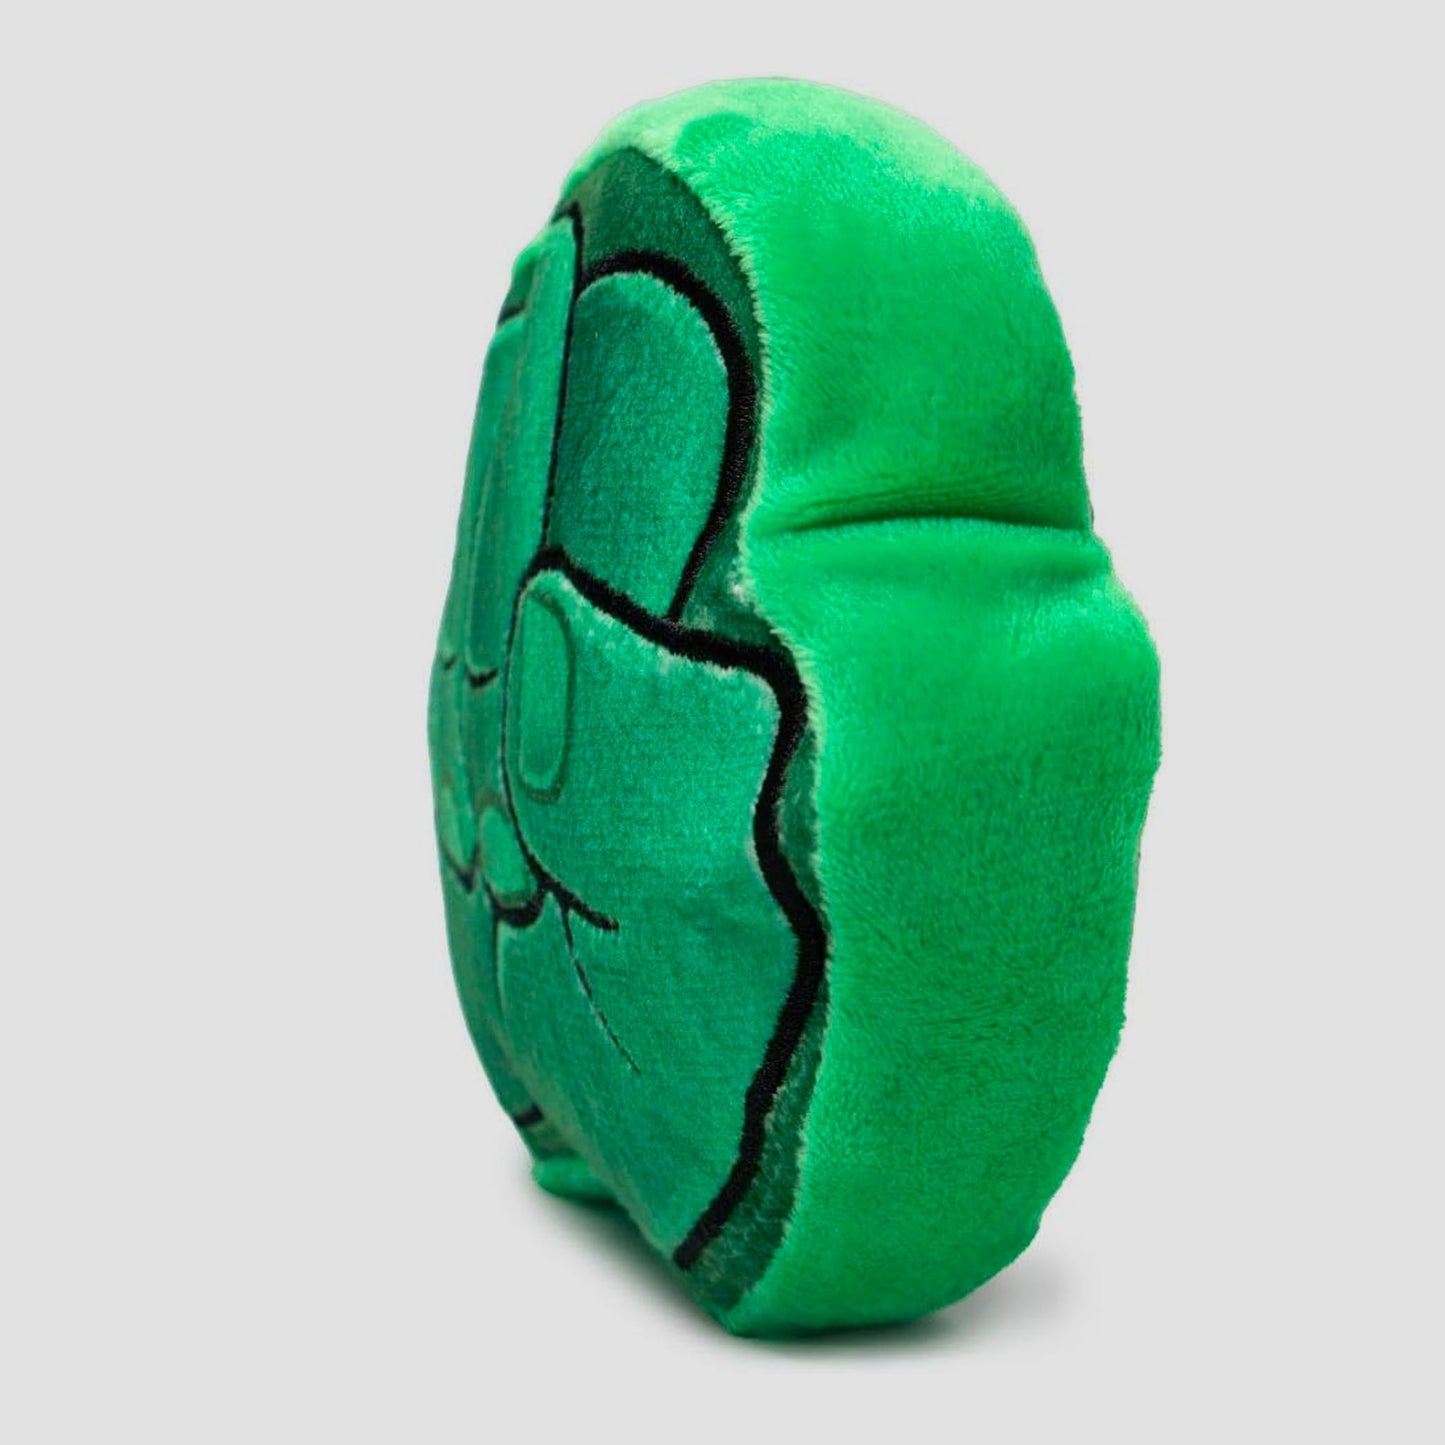 Hulk Fist (Marvel) Dog Plush Squeaker Toy